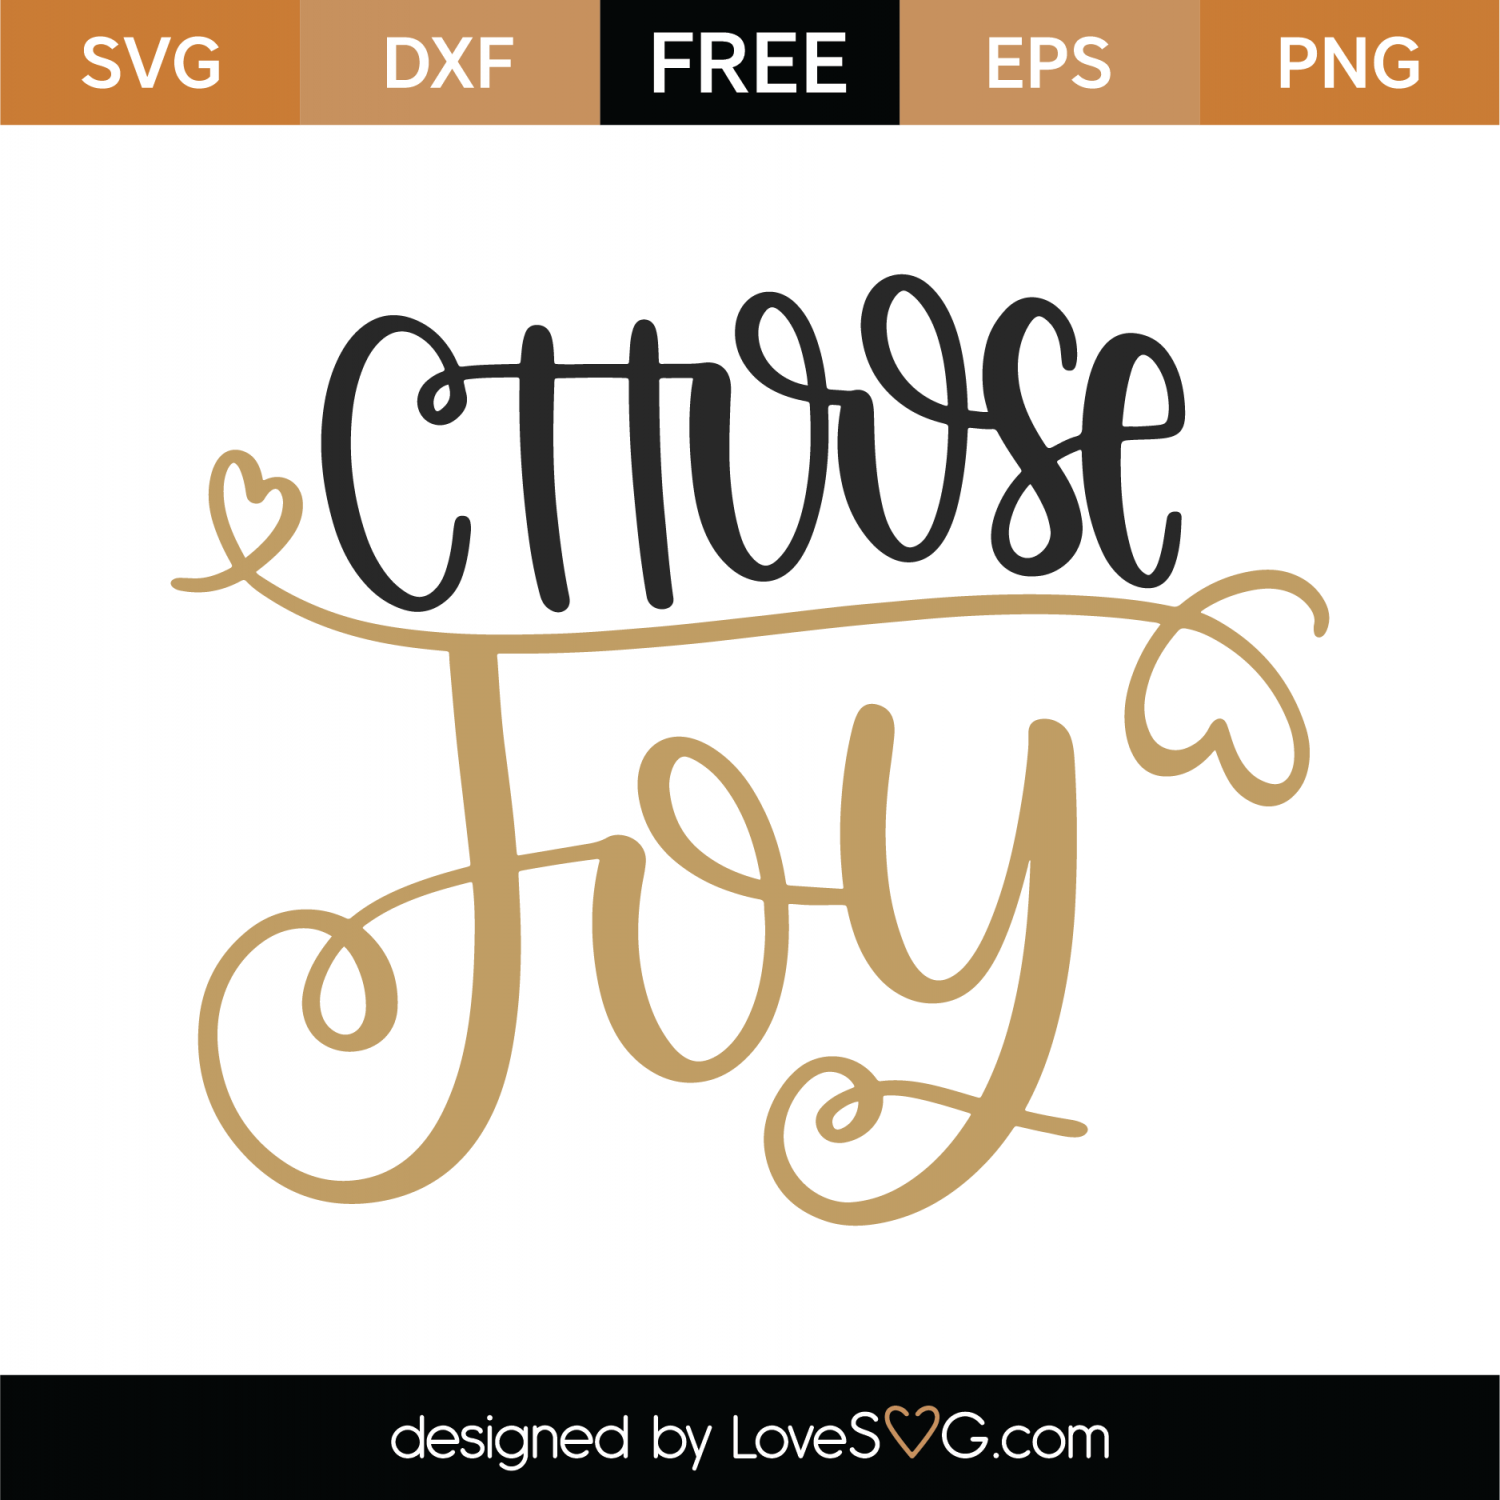 Download Free Choose Joy SVG Cut File | Lovesvg.com